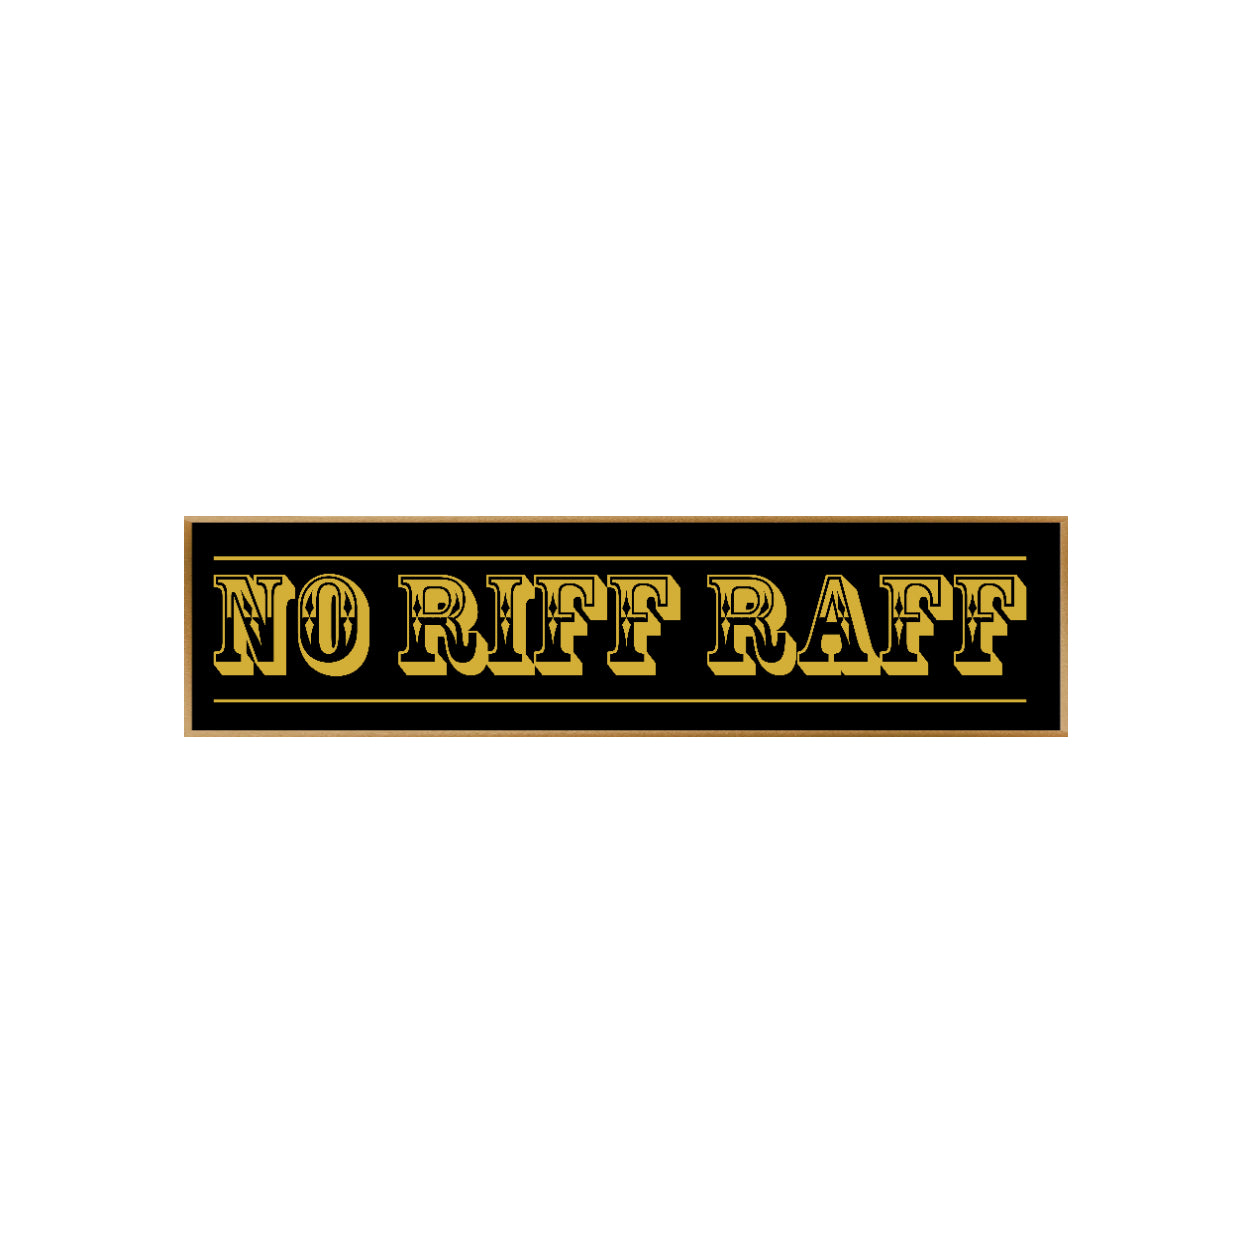 No Riff Raff Print